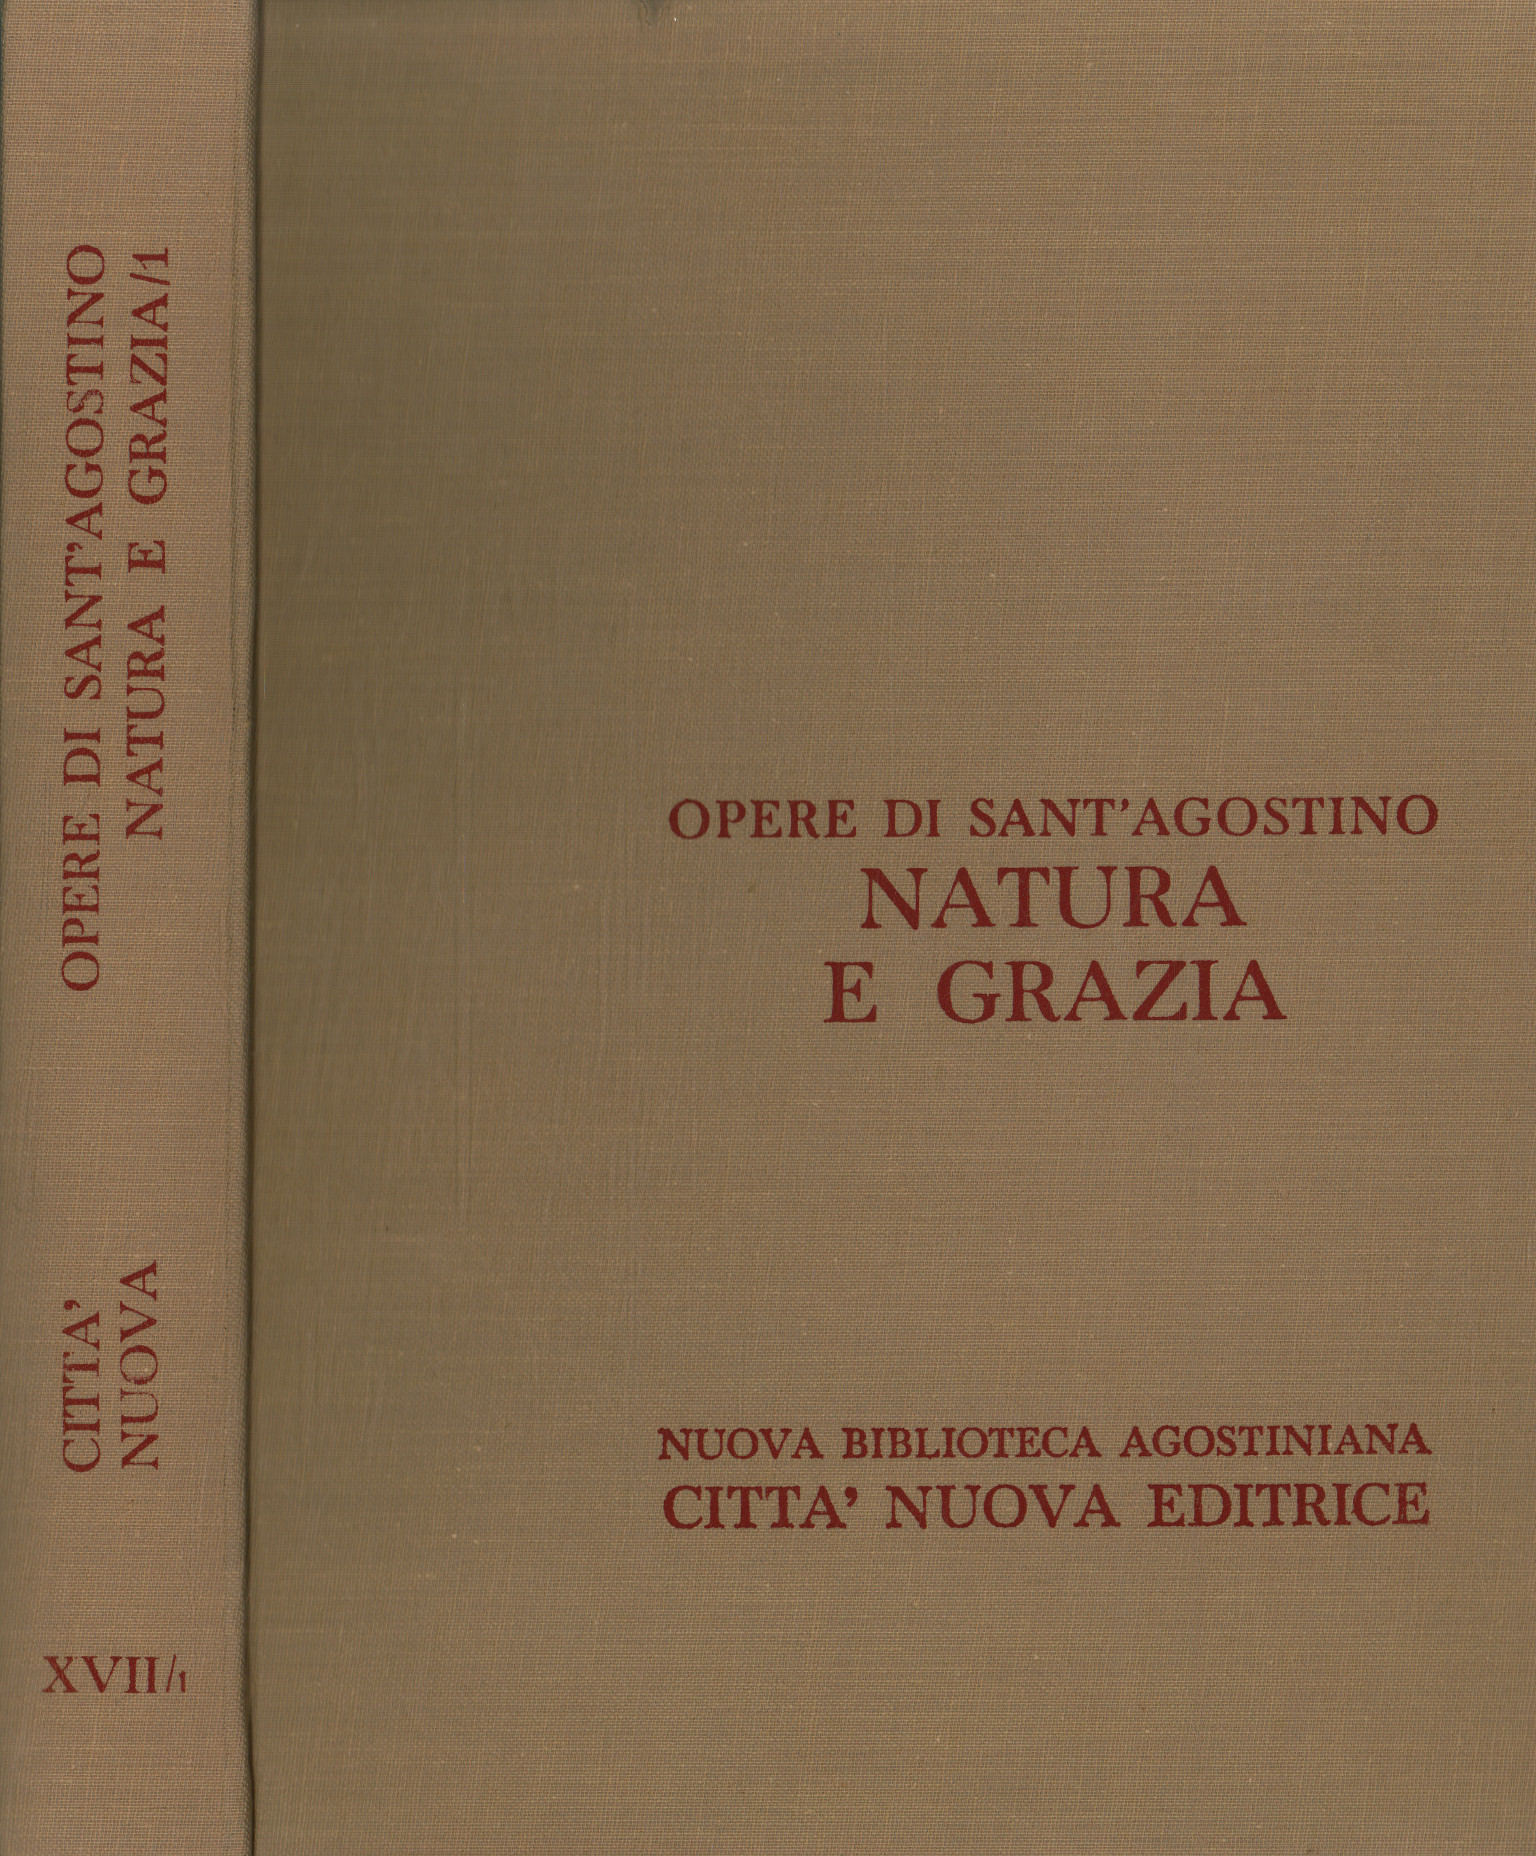 Obras de Sant'Agostino. Naturaleza